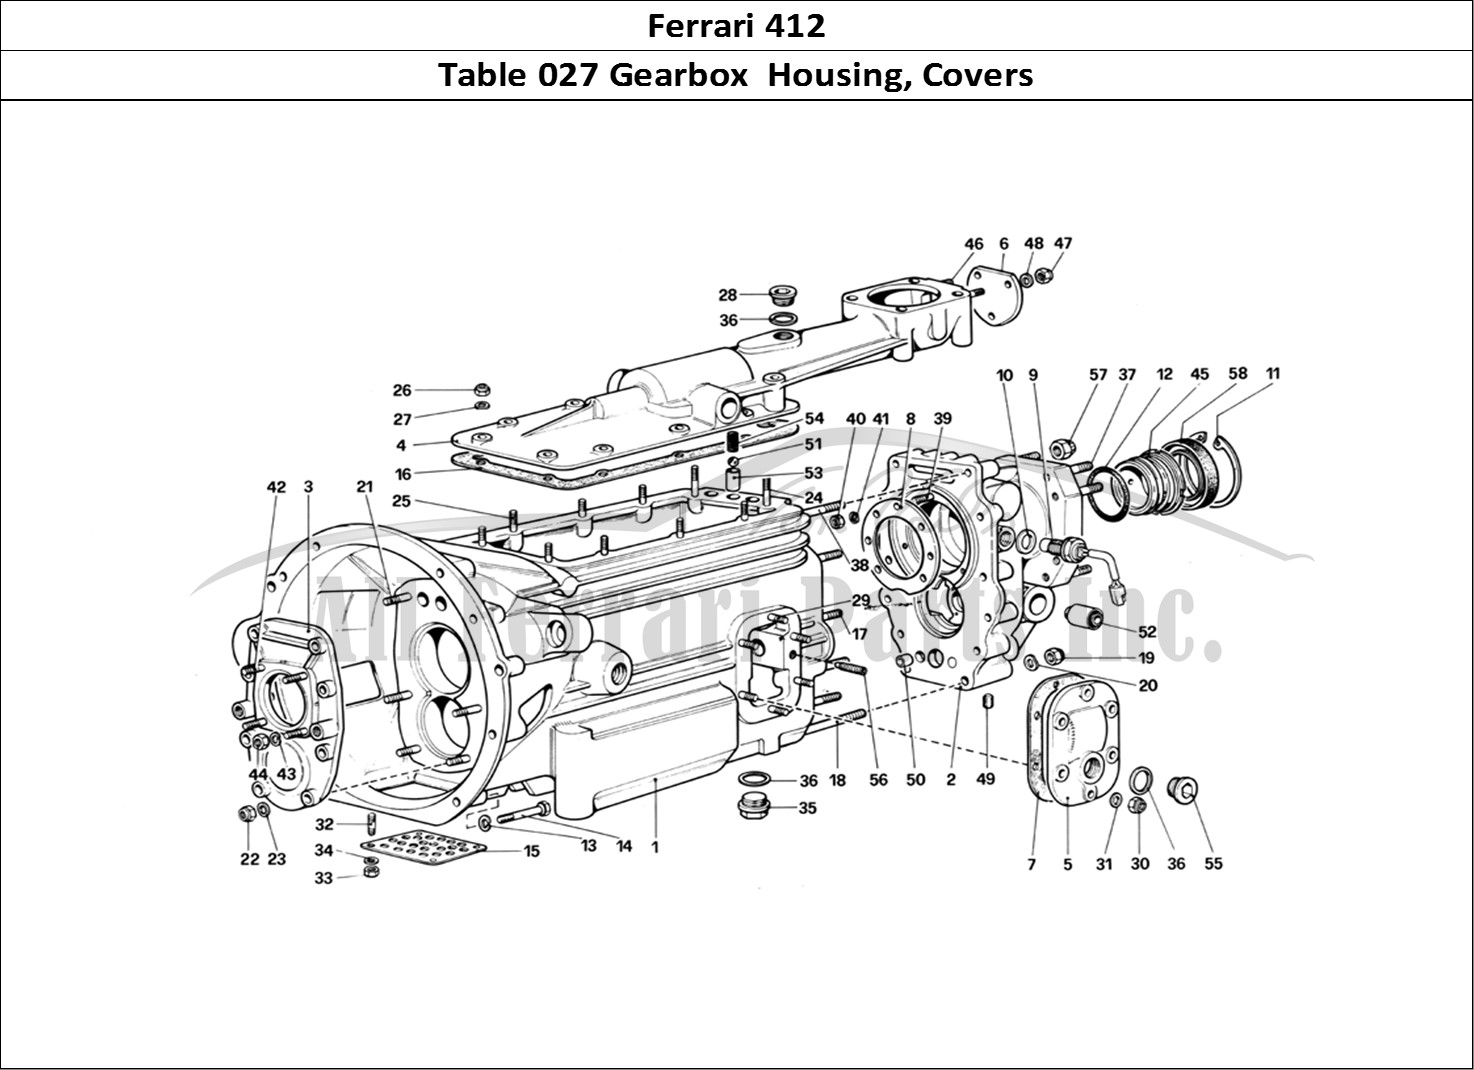 Ferrari Parts Ferrari 412 (Mechanical) Page 027 Gearbox- 412 M.